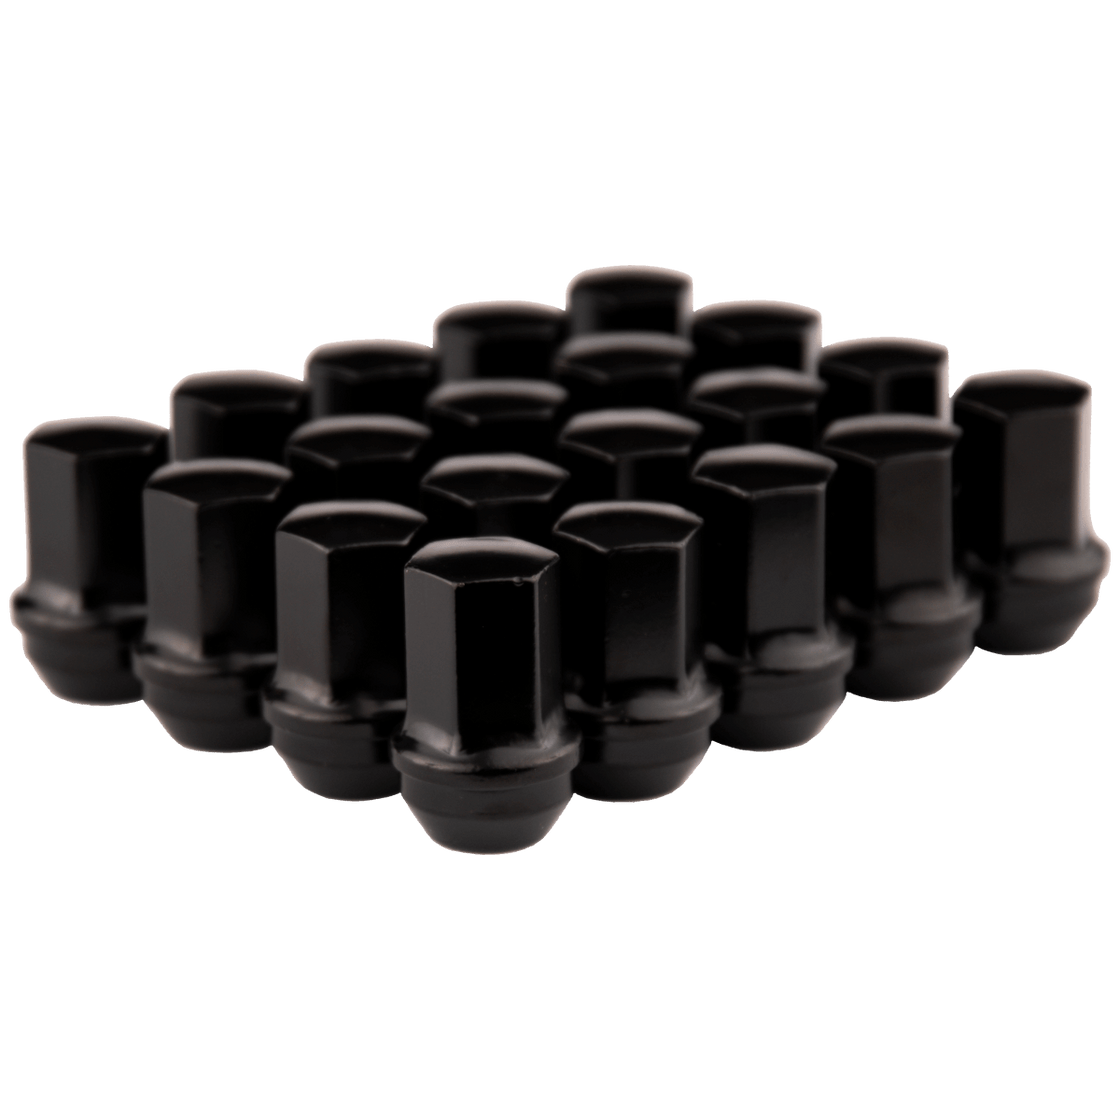 20-Piece ASTRO-NUTS Lug Nut Set for Zink Wheels - Black